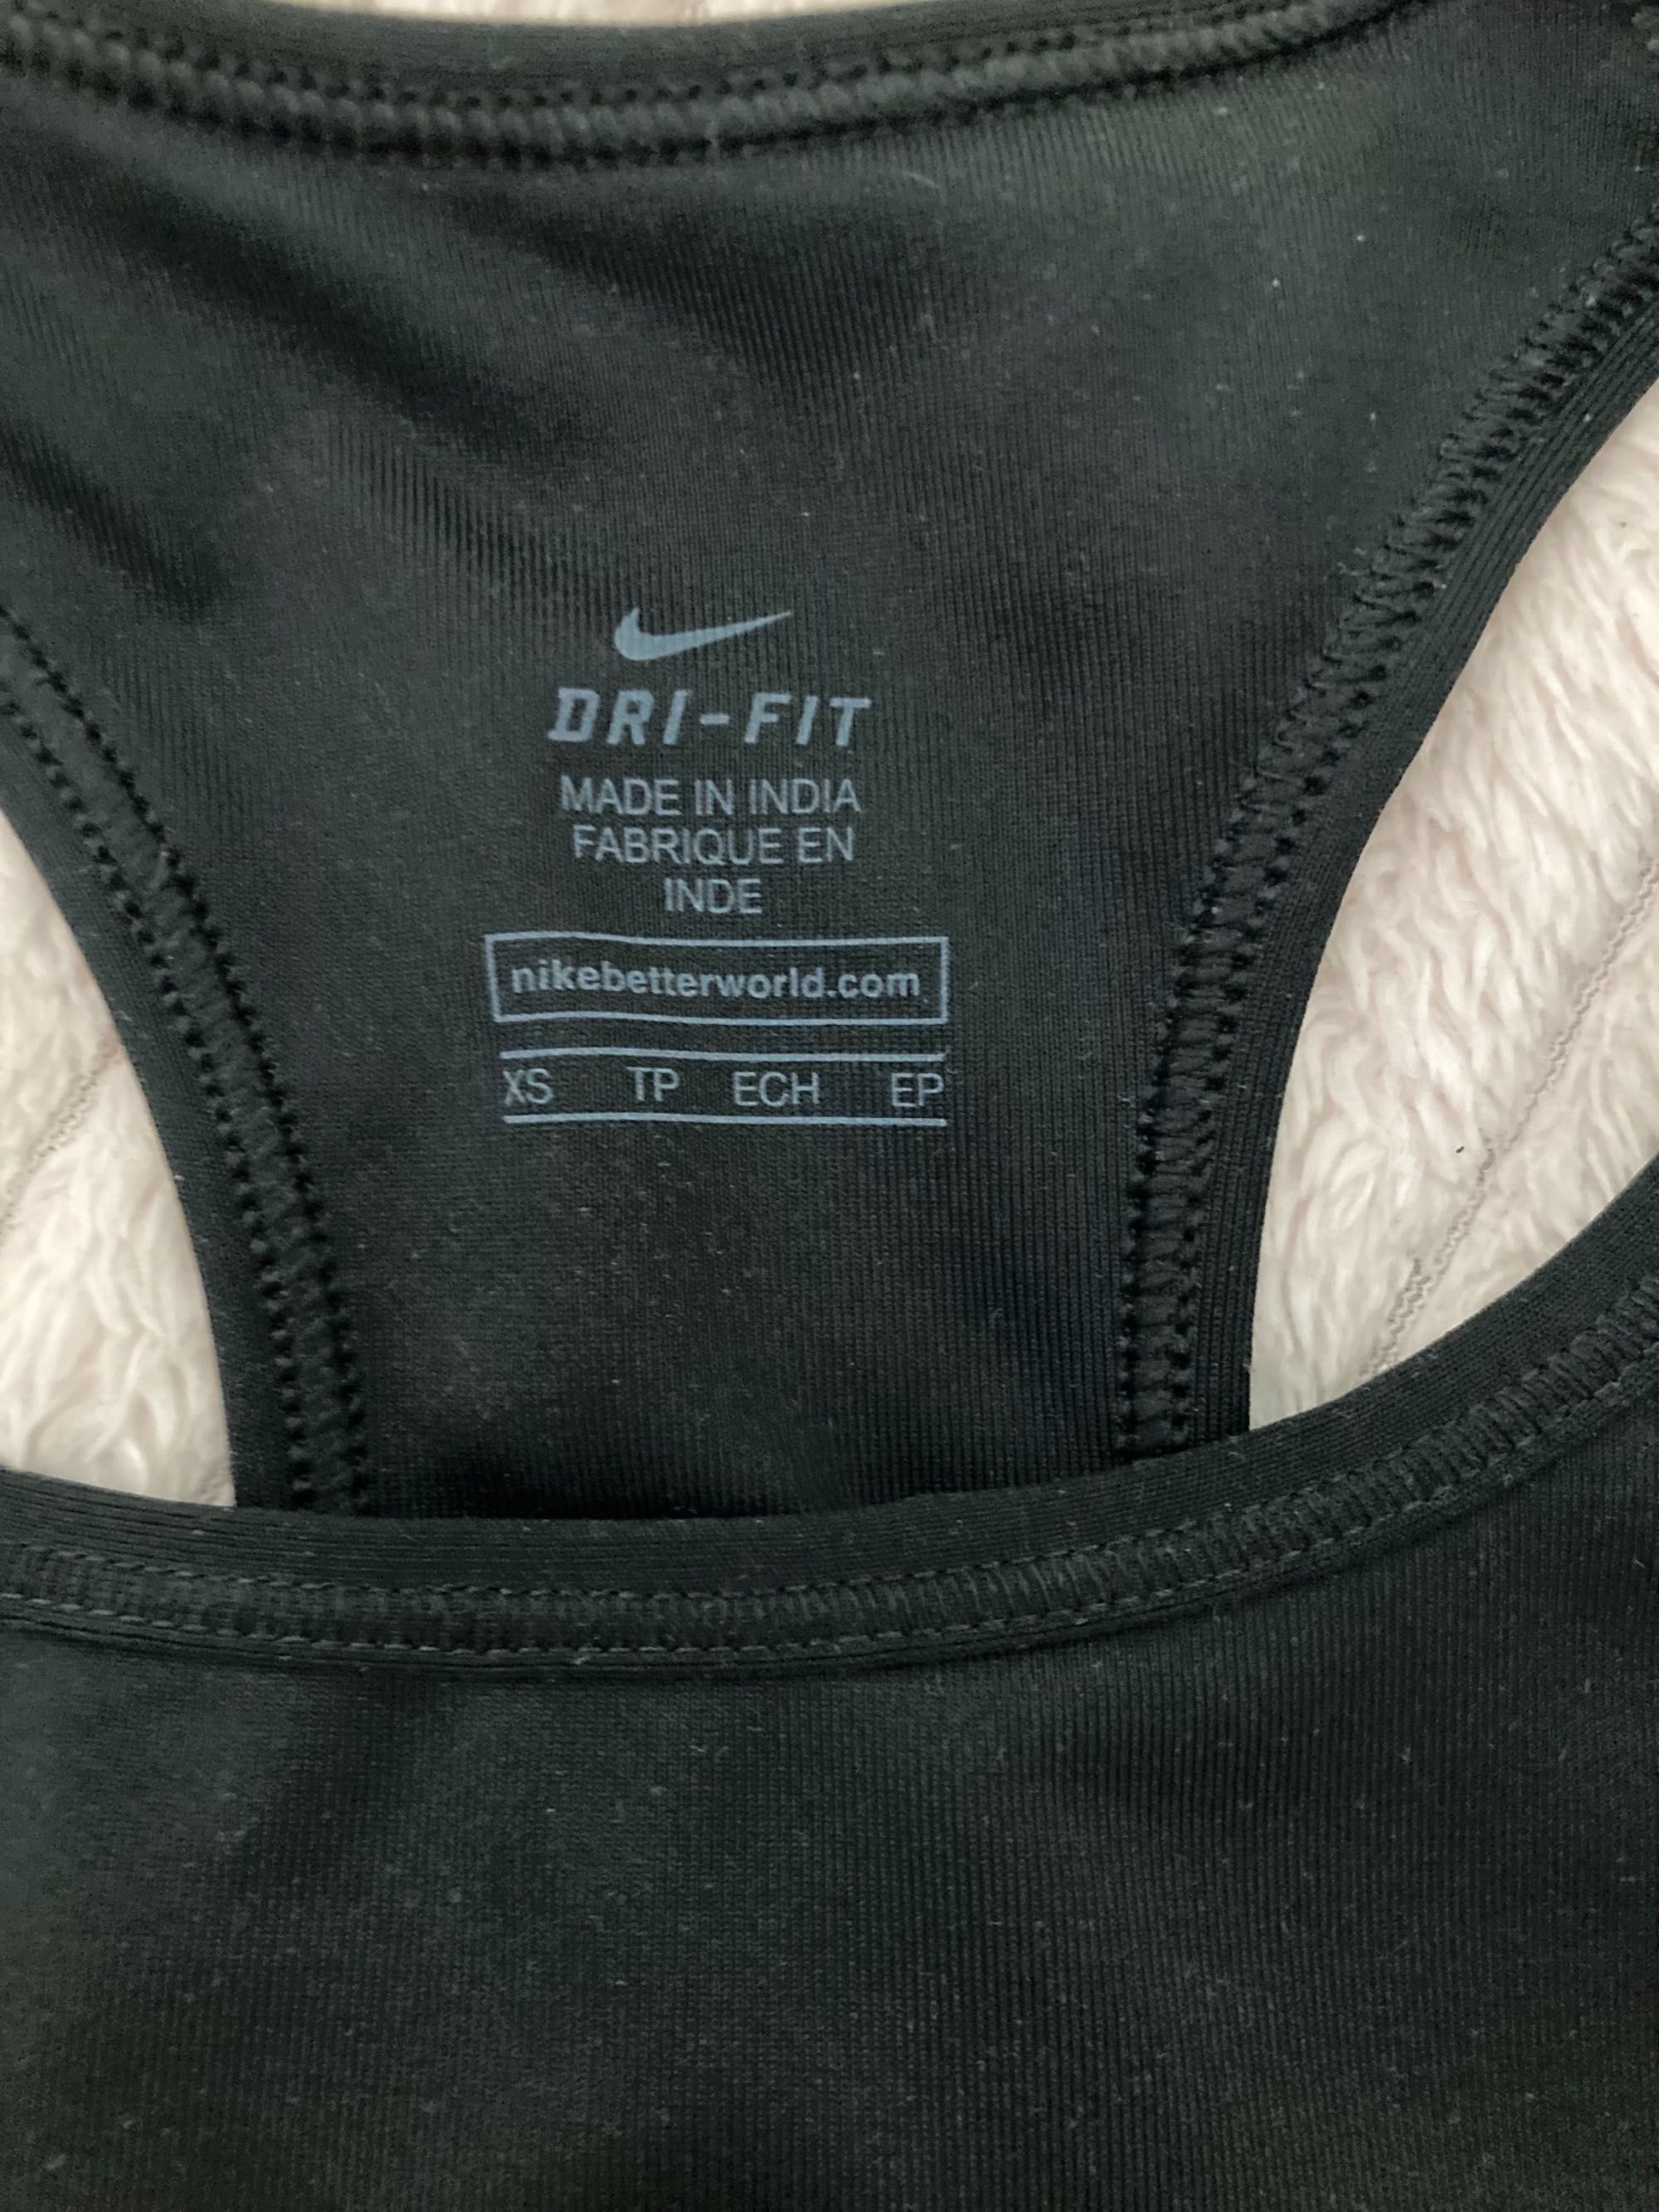 Женский топ Nike dri-fit